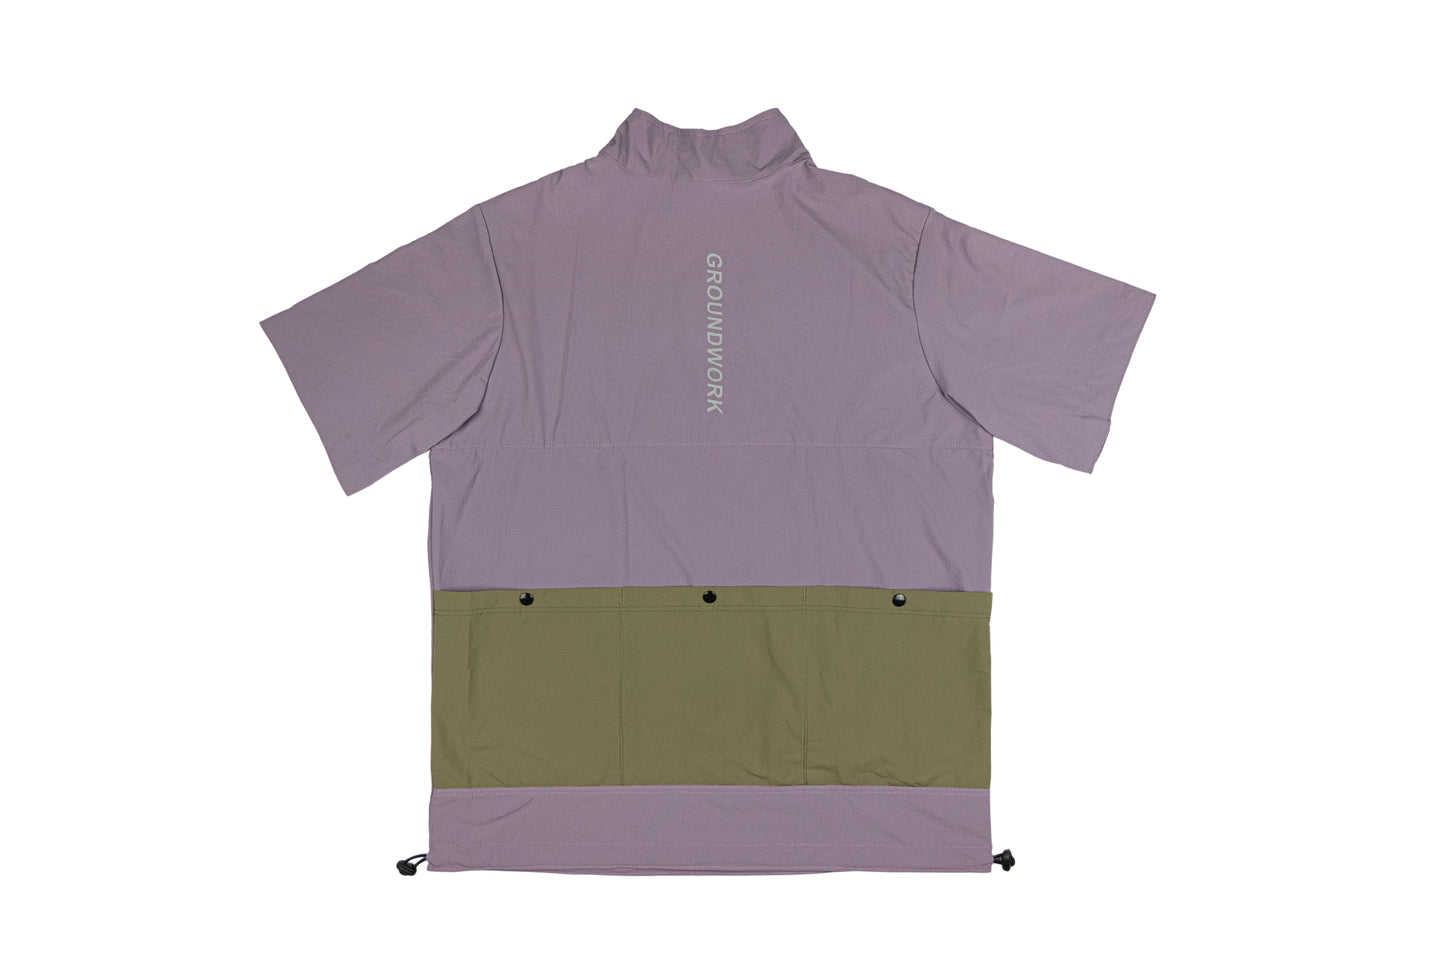 GW Quarter ziped Trail Shirt (Cyber Grape)